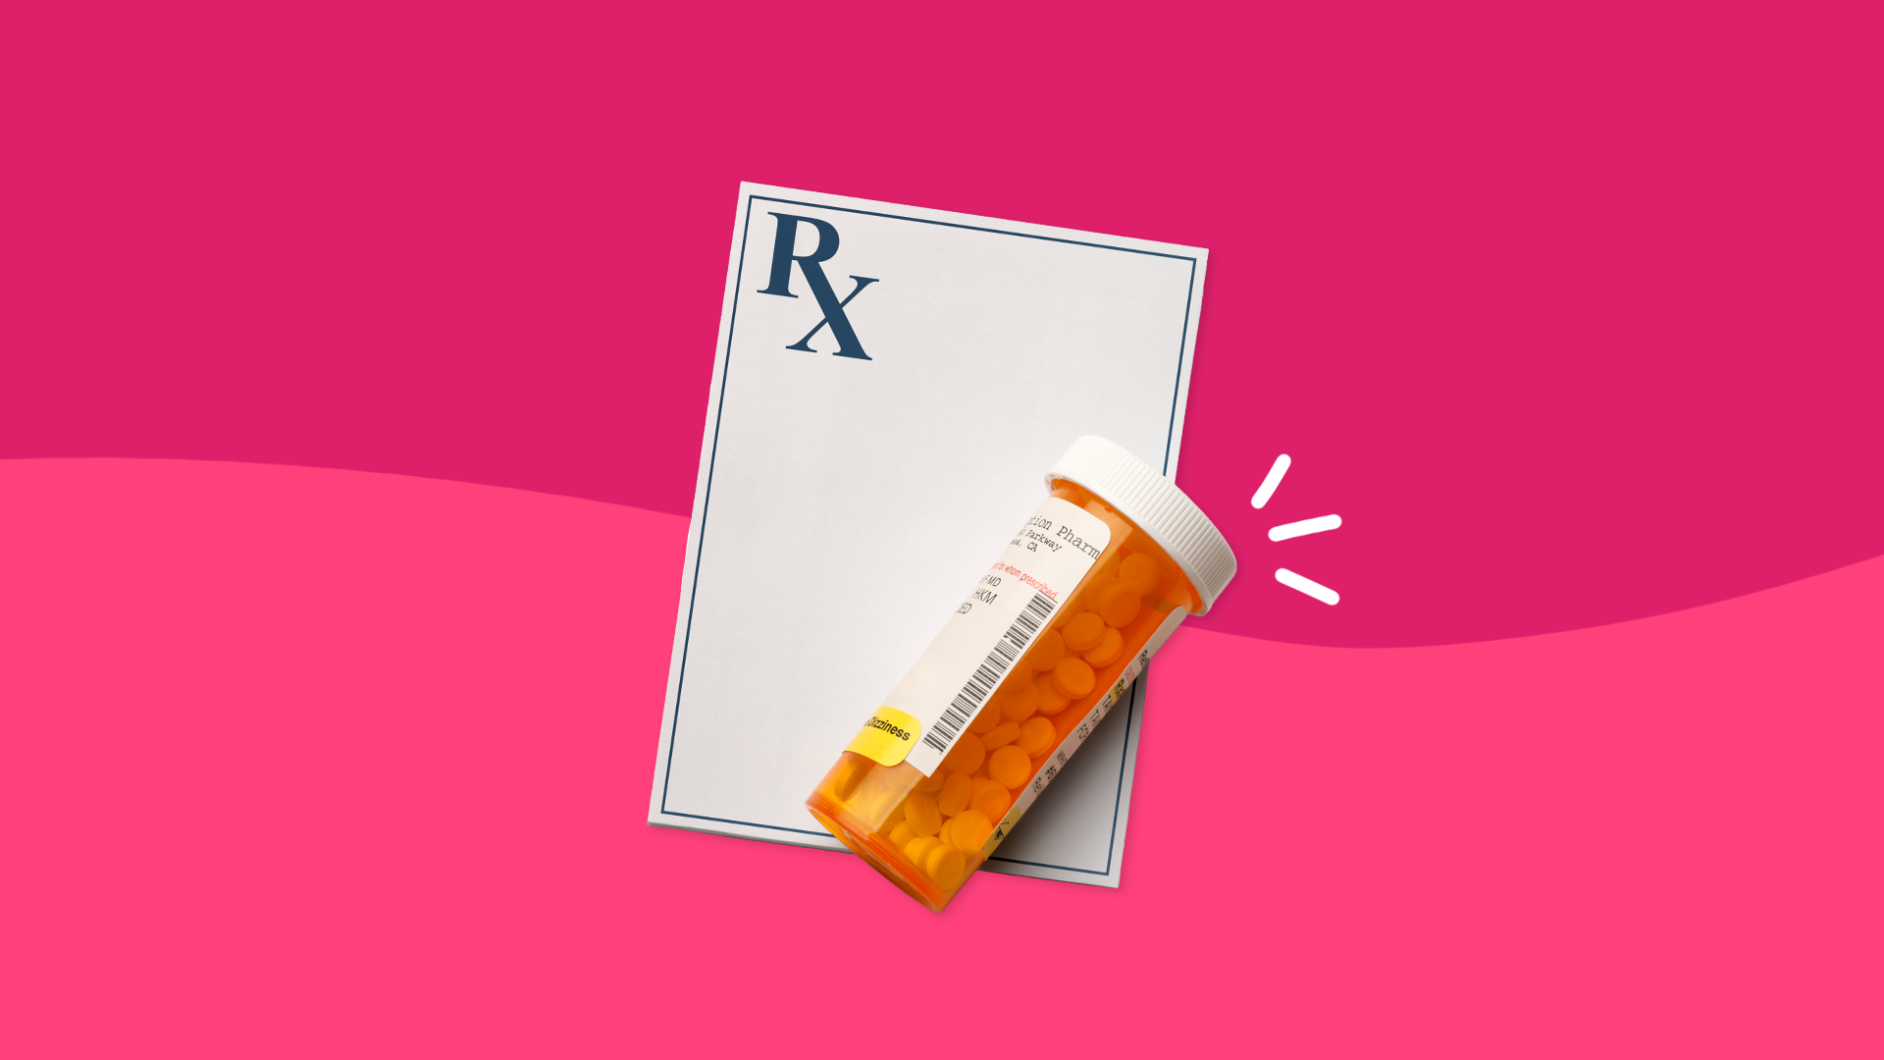 Prescription pad with pill bottle: Common vs. serious Eliquis side effects